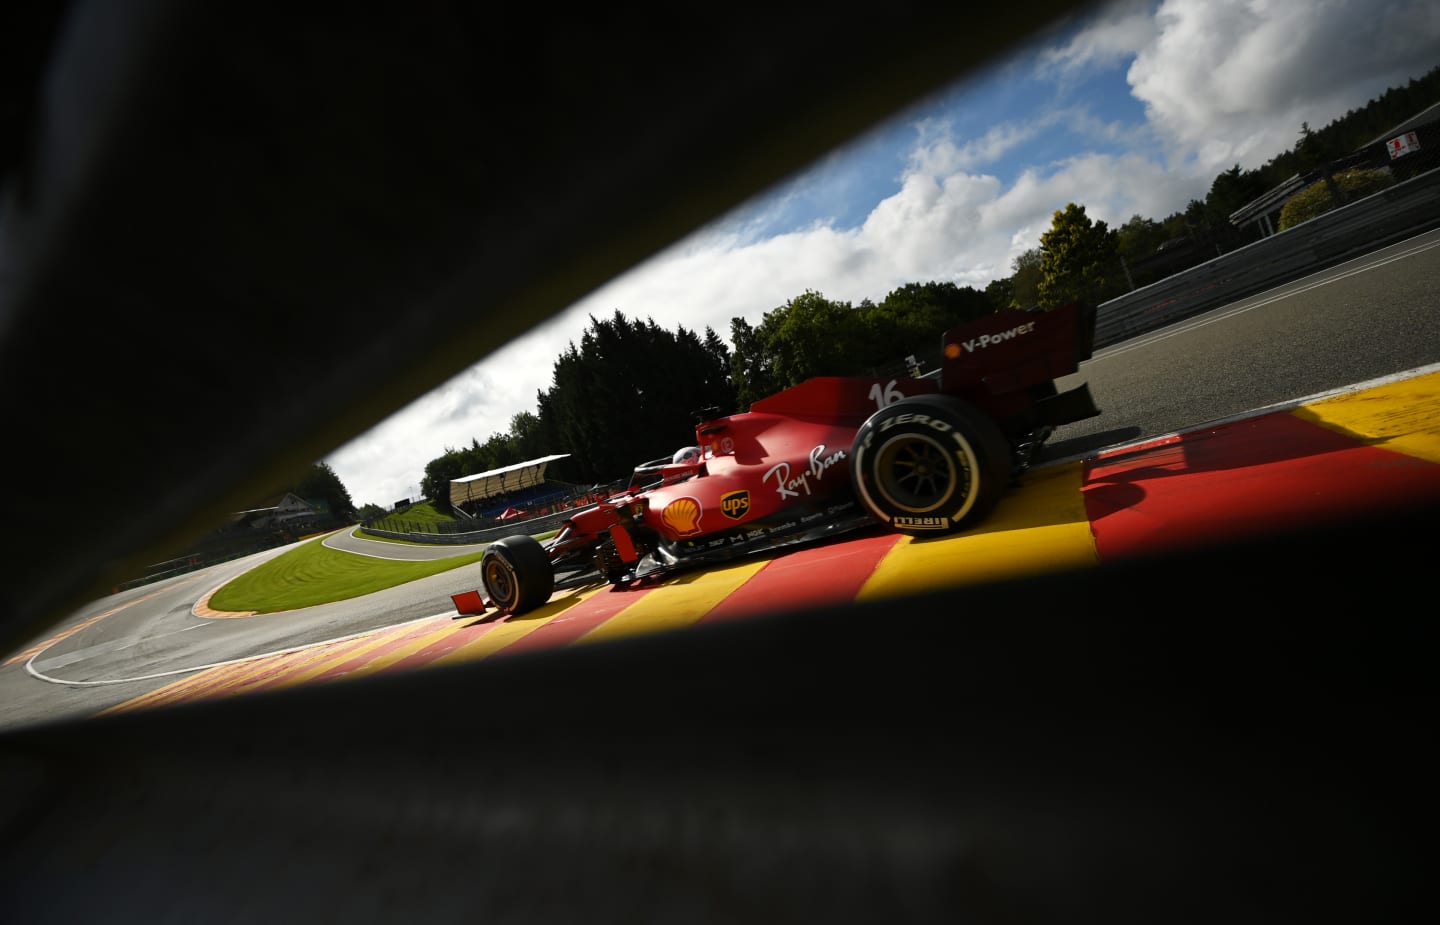 SPA, BELGIUM - AUGUST 27: Charles Leclerc of Monaco driving the (16) Scuderia Ferrari SF21 during